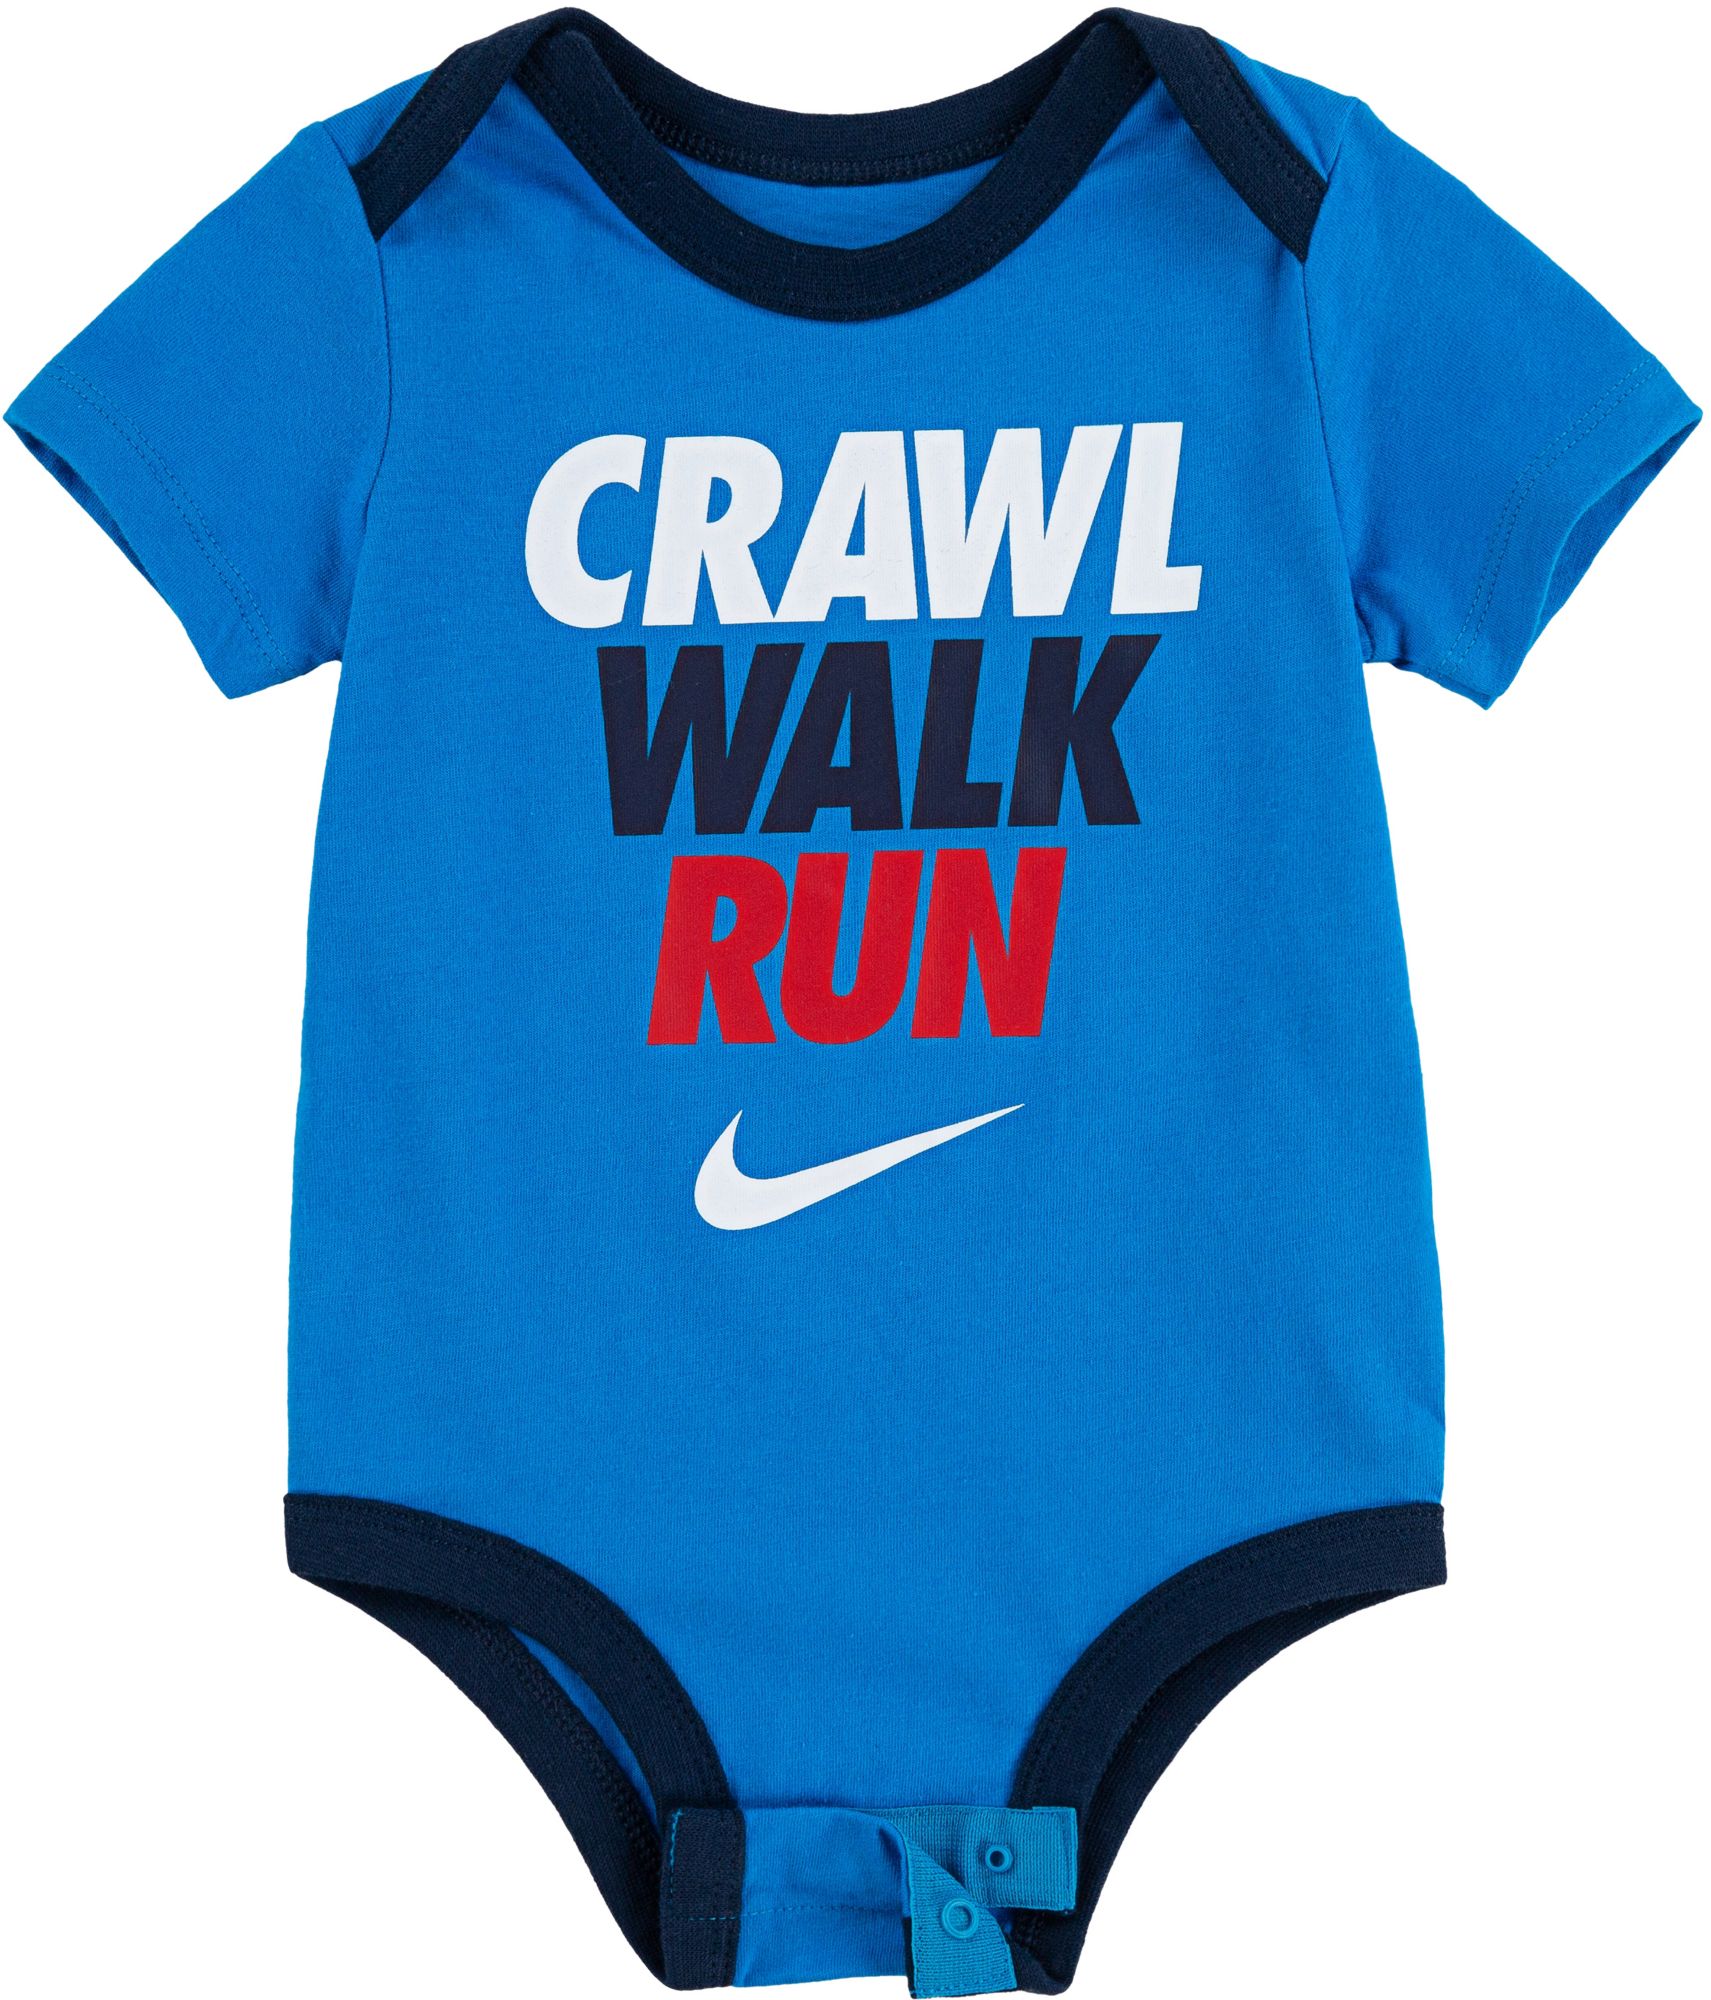 Nike Infant Crawl Walk Run Bodysuit 